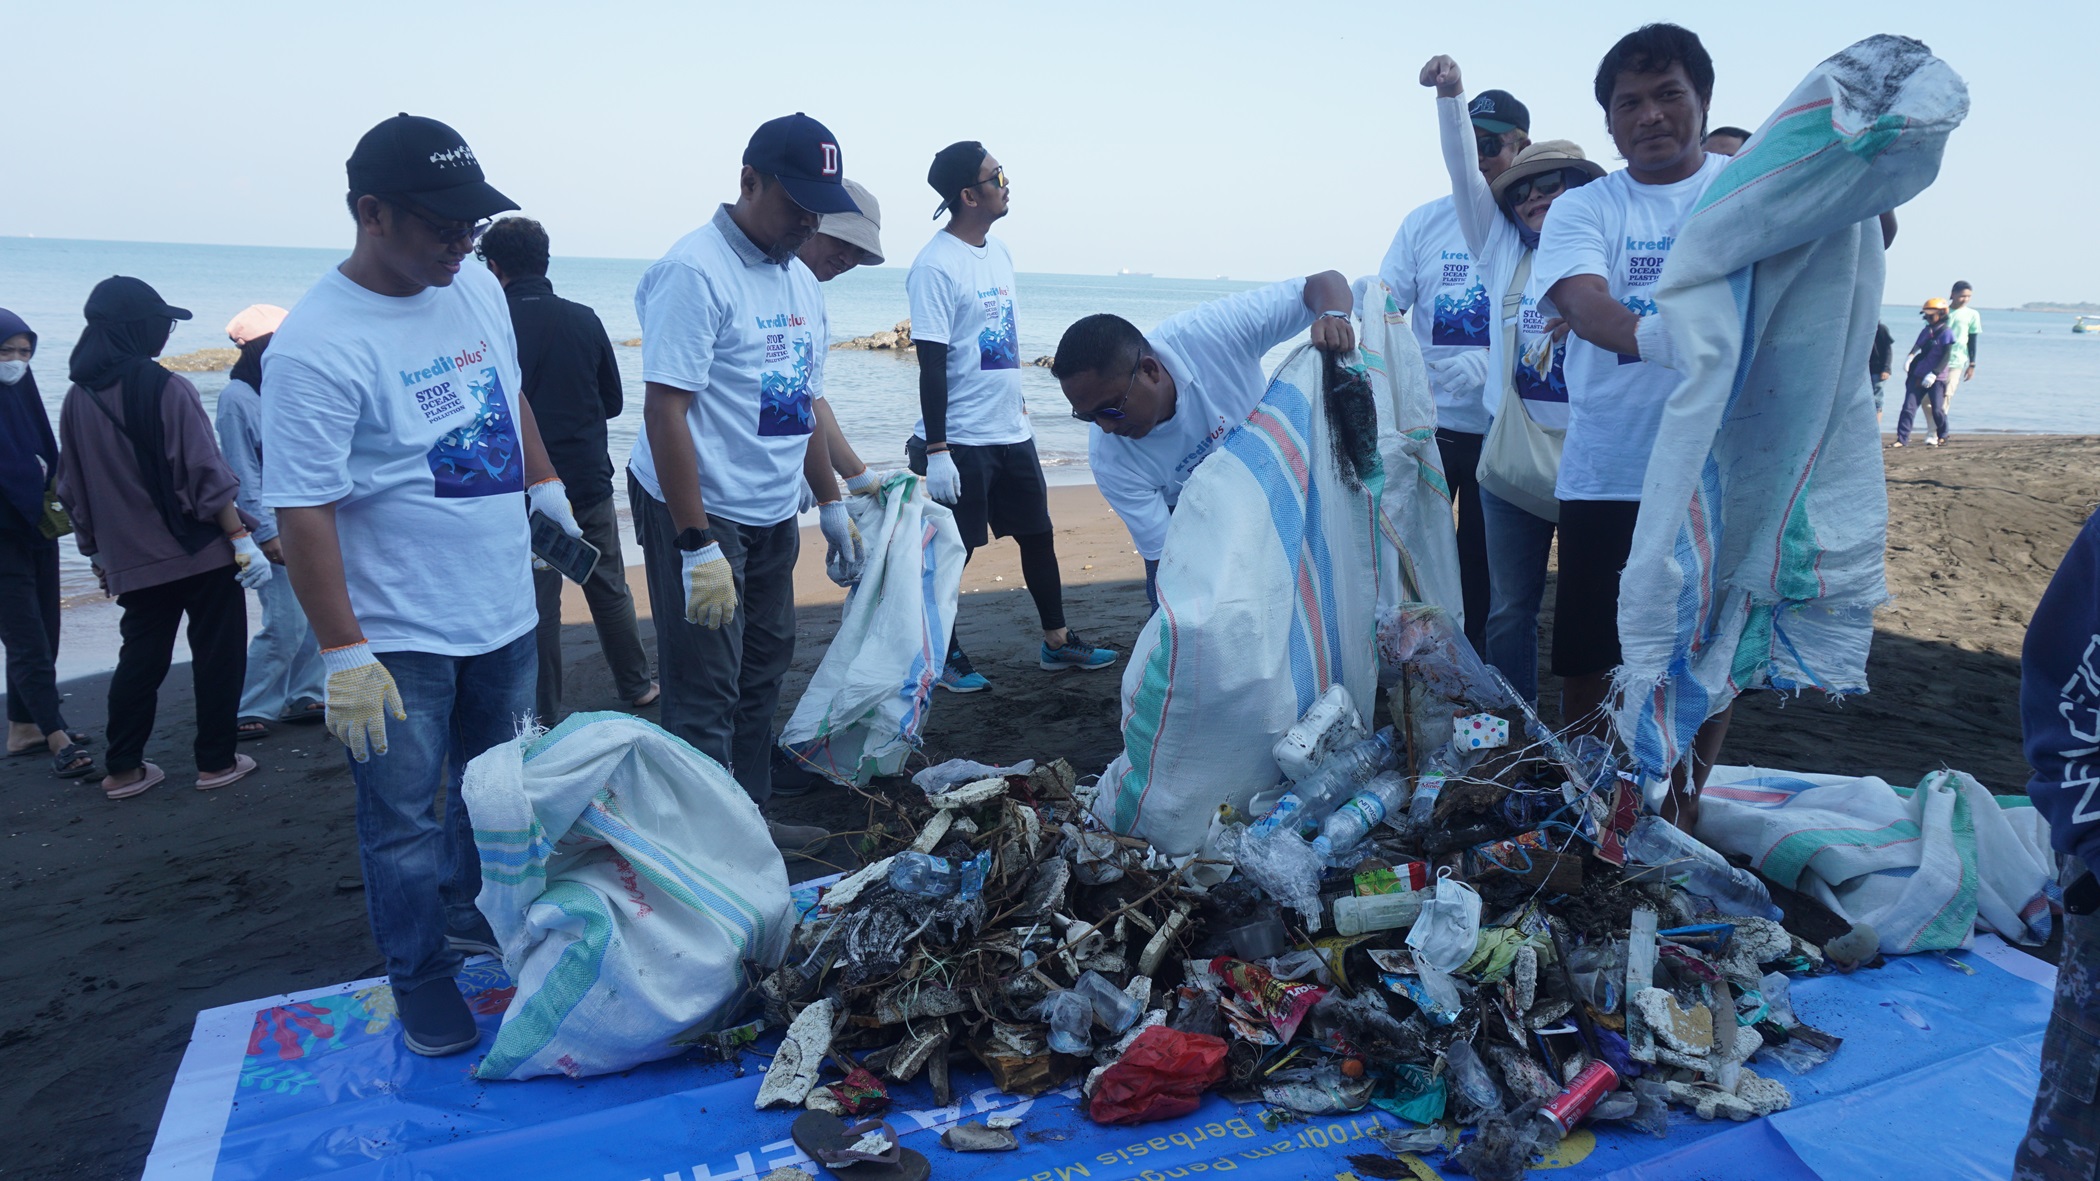 Aksi Pelestarian Lingkungan, KreditPlus Bersama YKL Indonesia Gelar Bersih Pantai dan Tanam Mangrove